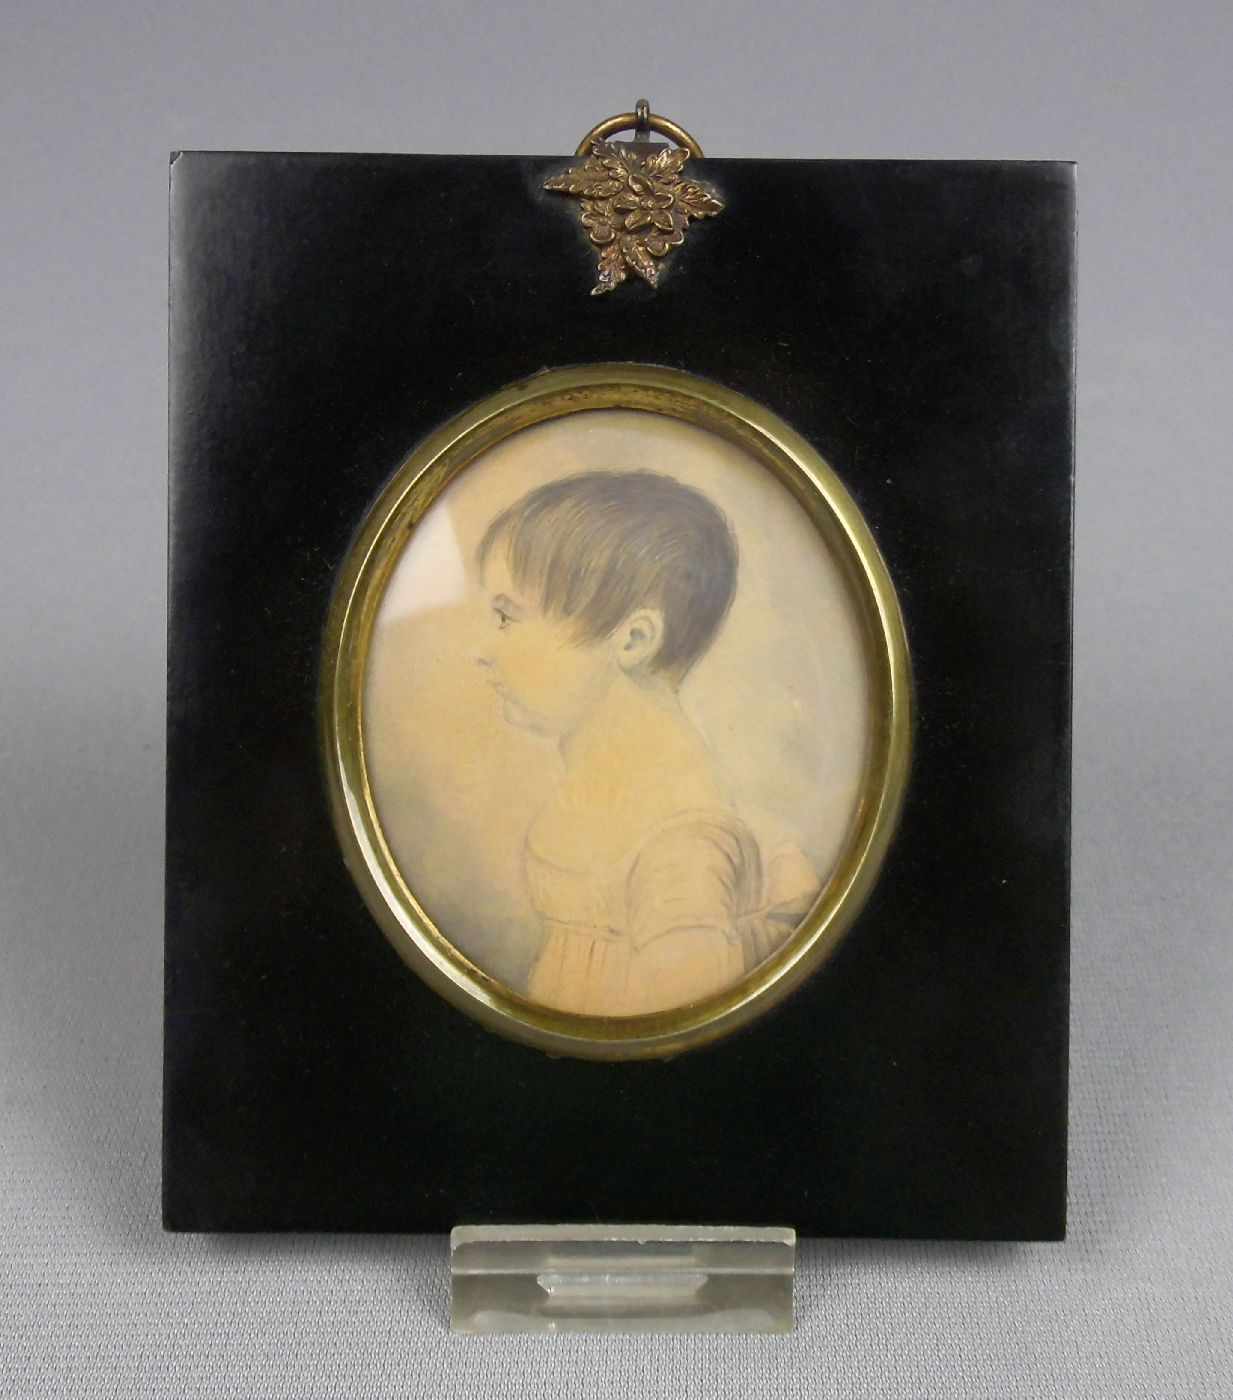 ANONYMUS (19. Jh.) - Miniatur / miniature: "Bildnis eines Mädchens", aquarellierte